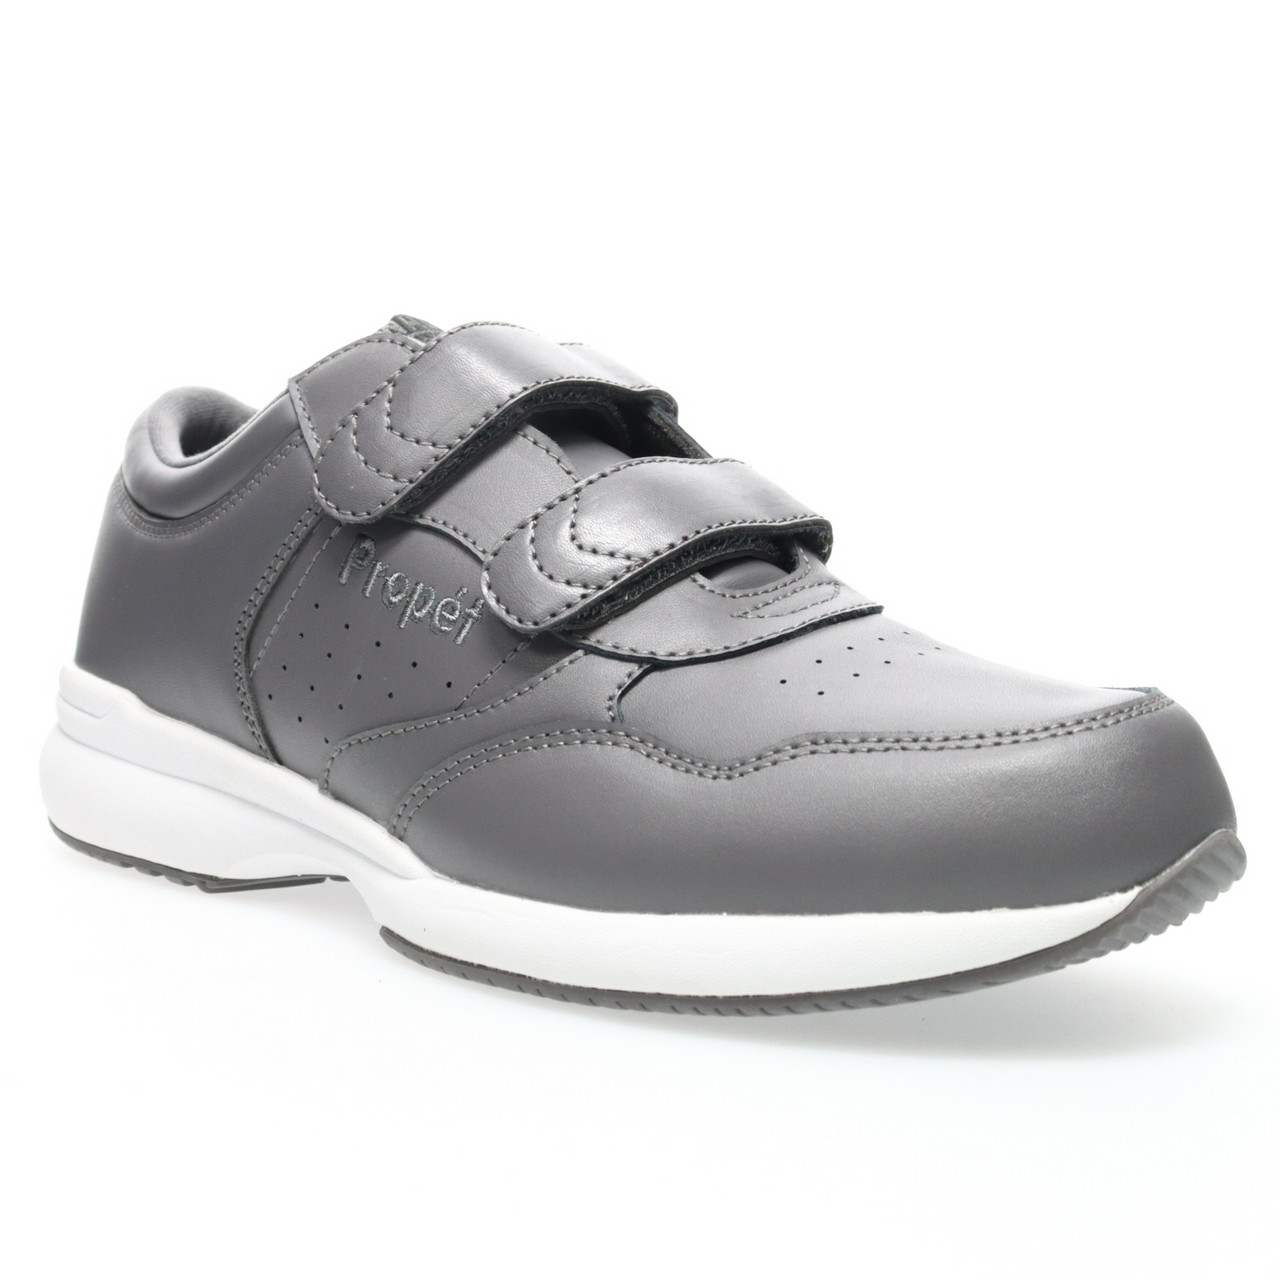 Propet M3705 LifeWalker Men's Athletic Shoe - Comfort Orthopedic Diabetic Athletic Shoe  - Extra Depth - Extra Wide